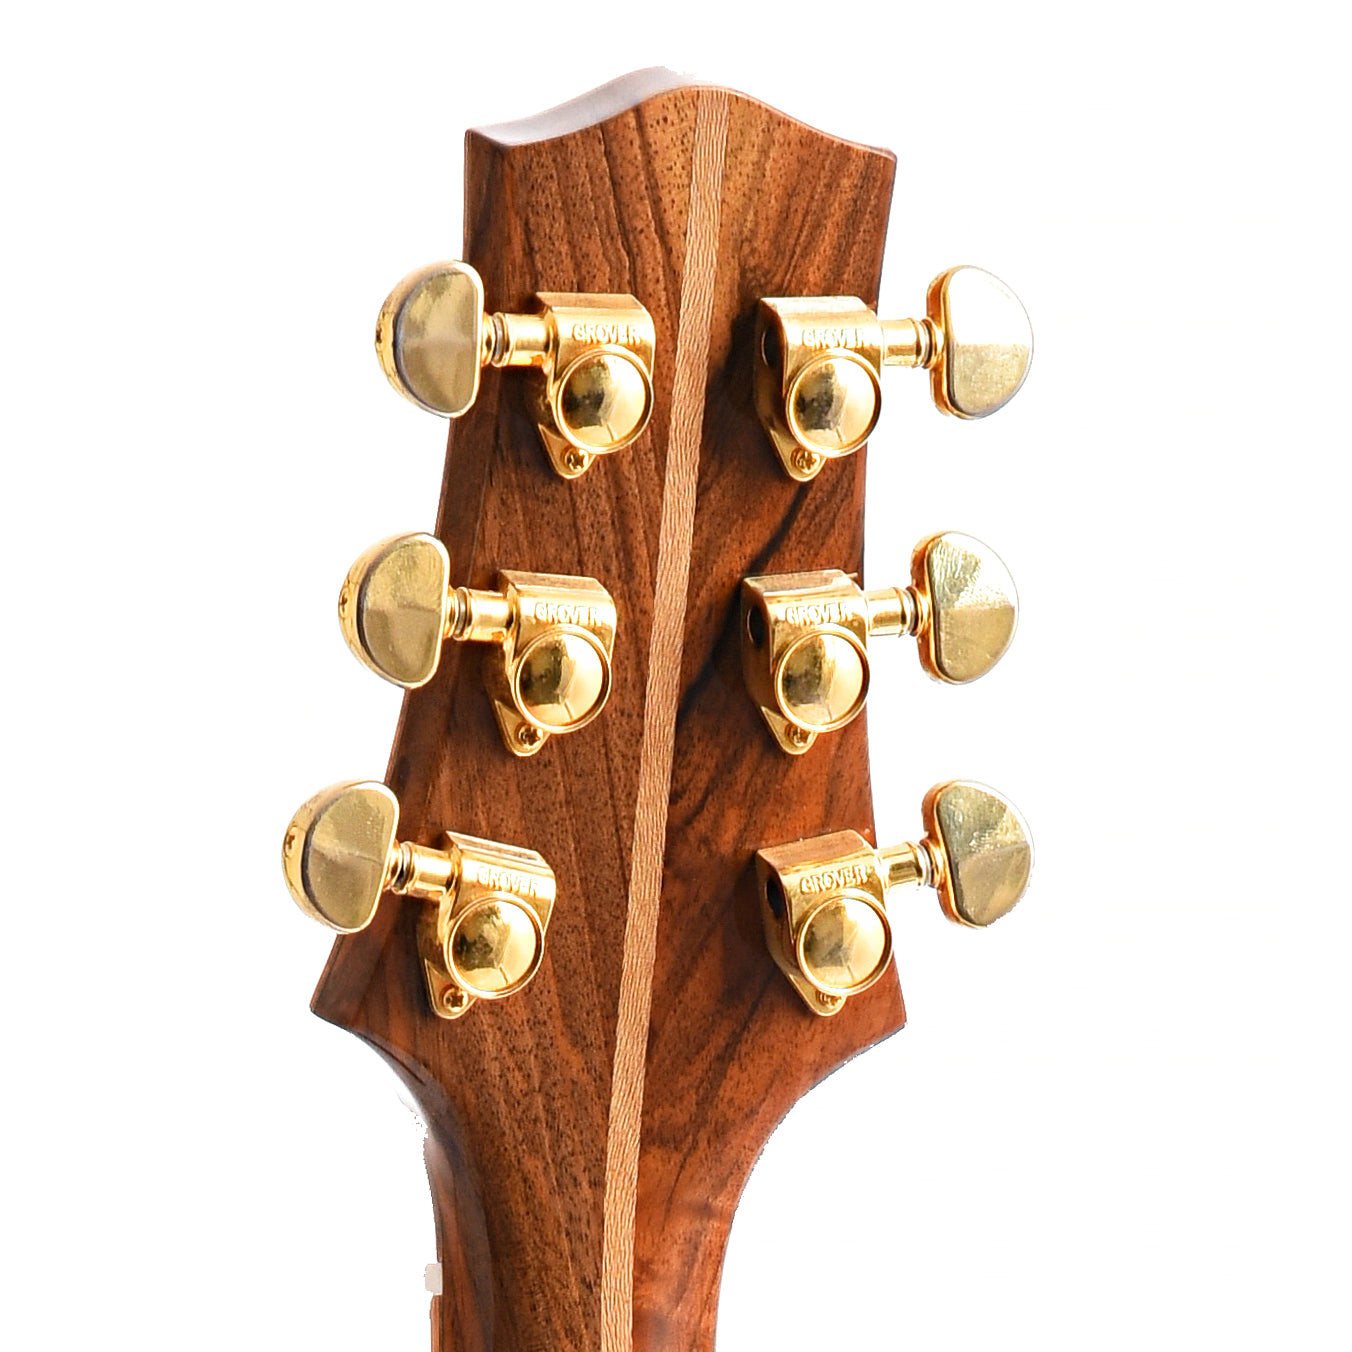 Image 10 of H.G. Leach "Kirby" Model (c.2002) - SKU# 20U-208177 : Product Type Flat-top Guitars : Elderly Instruments